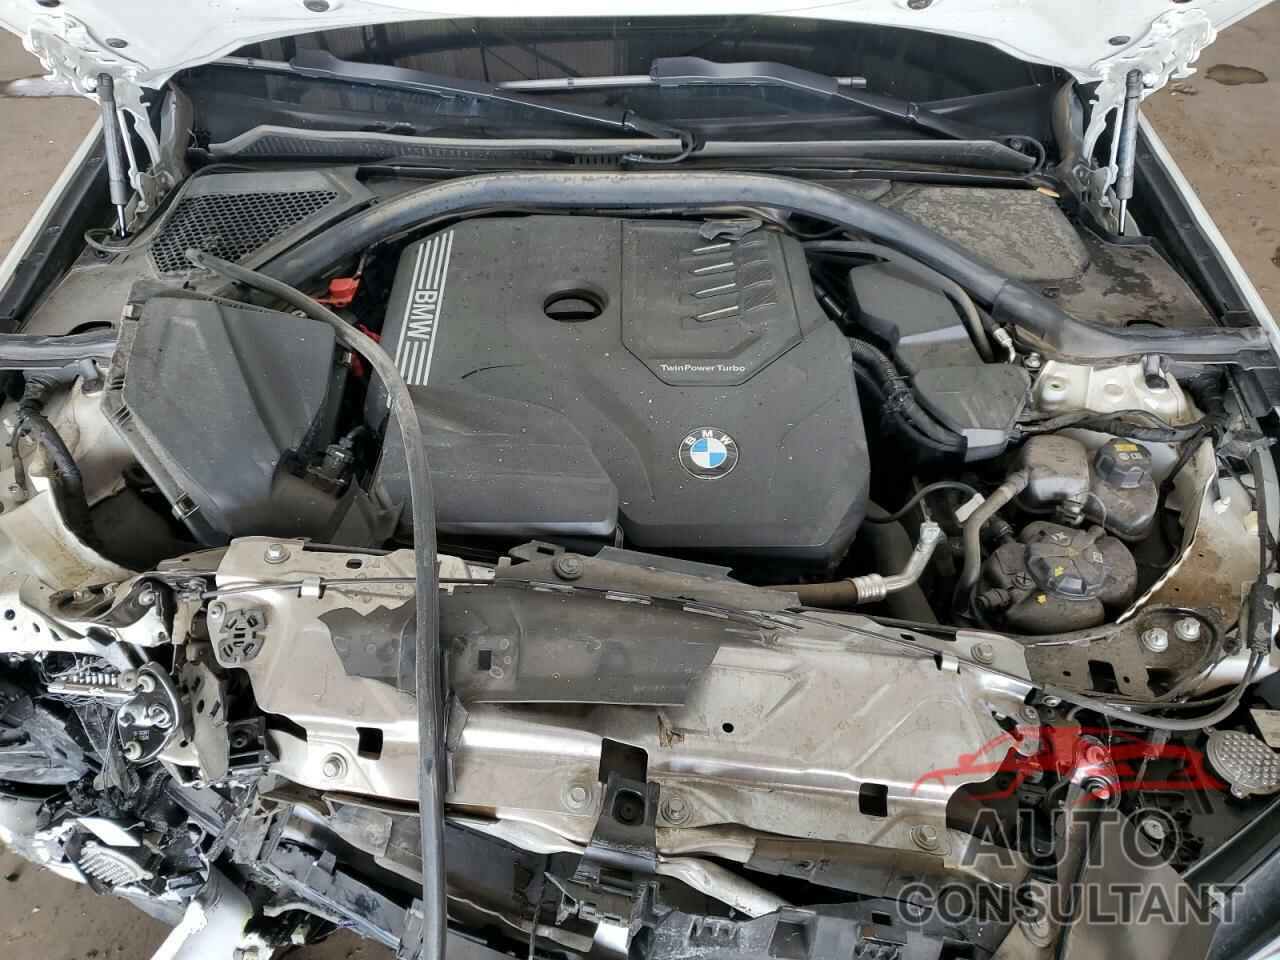 BMW 3 SERIES 2022 - 3MW5R1J04N8C24477